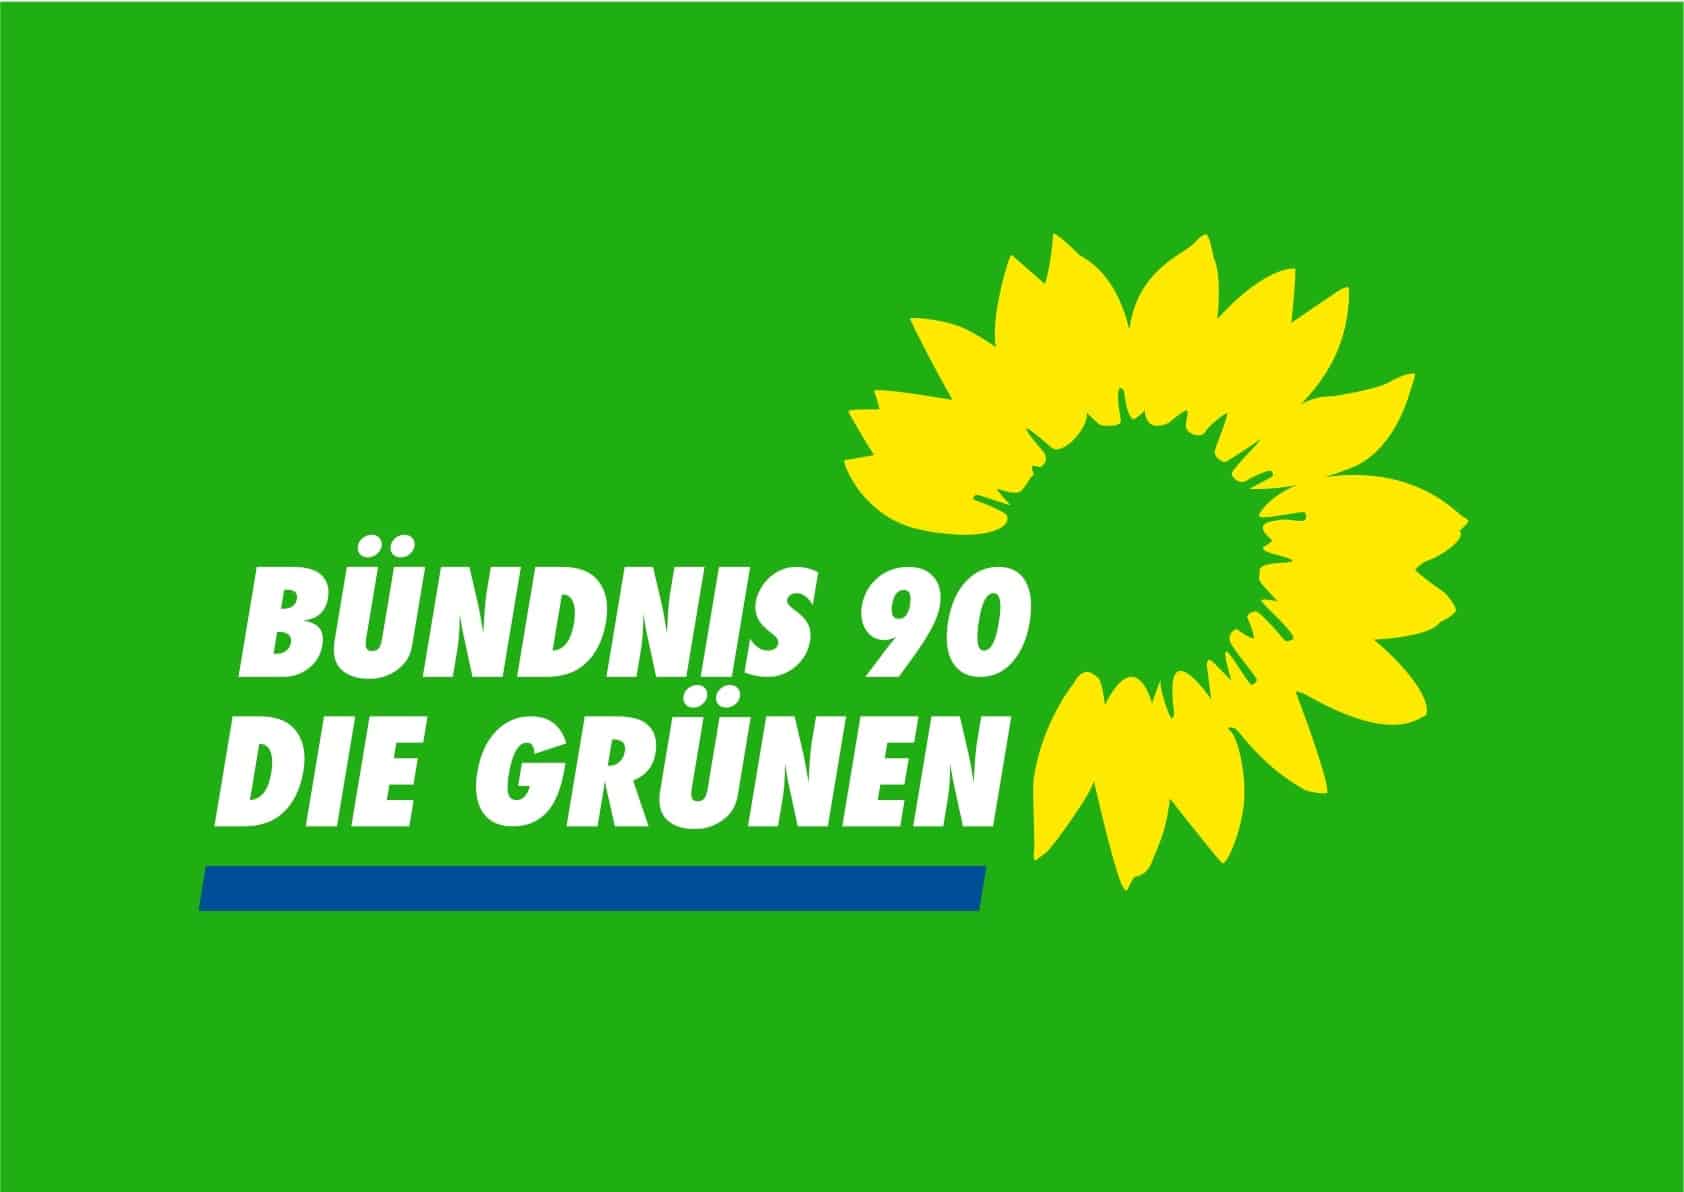 GRÜNE Logo 4farb auf grün